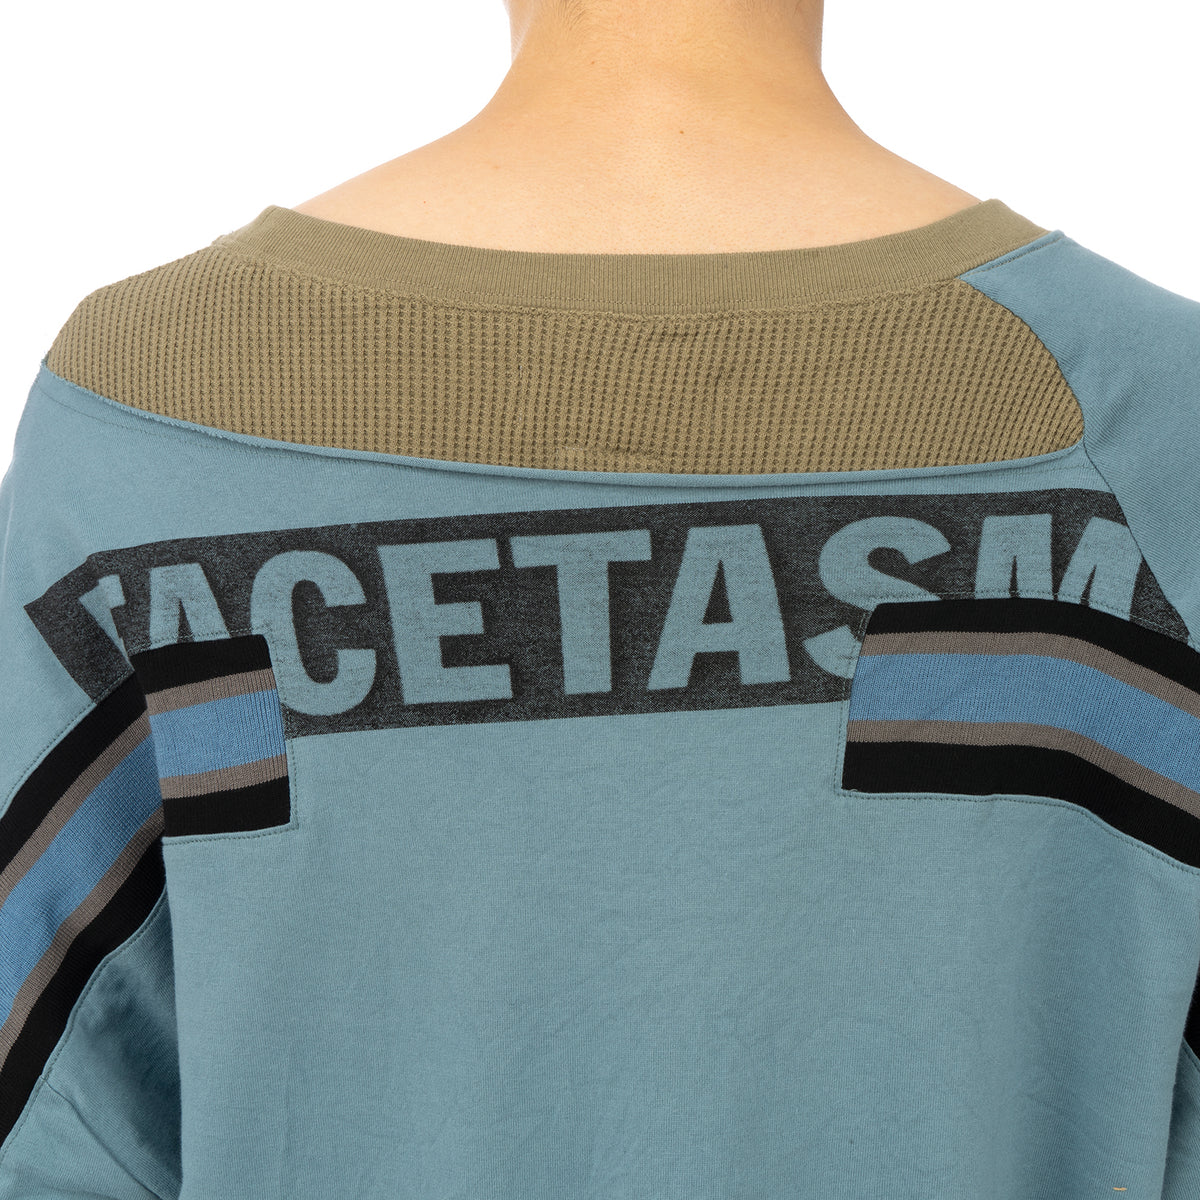 FACETASM | Layered T-Shirt Blue - Concrete